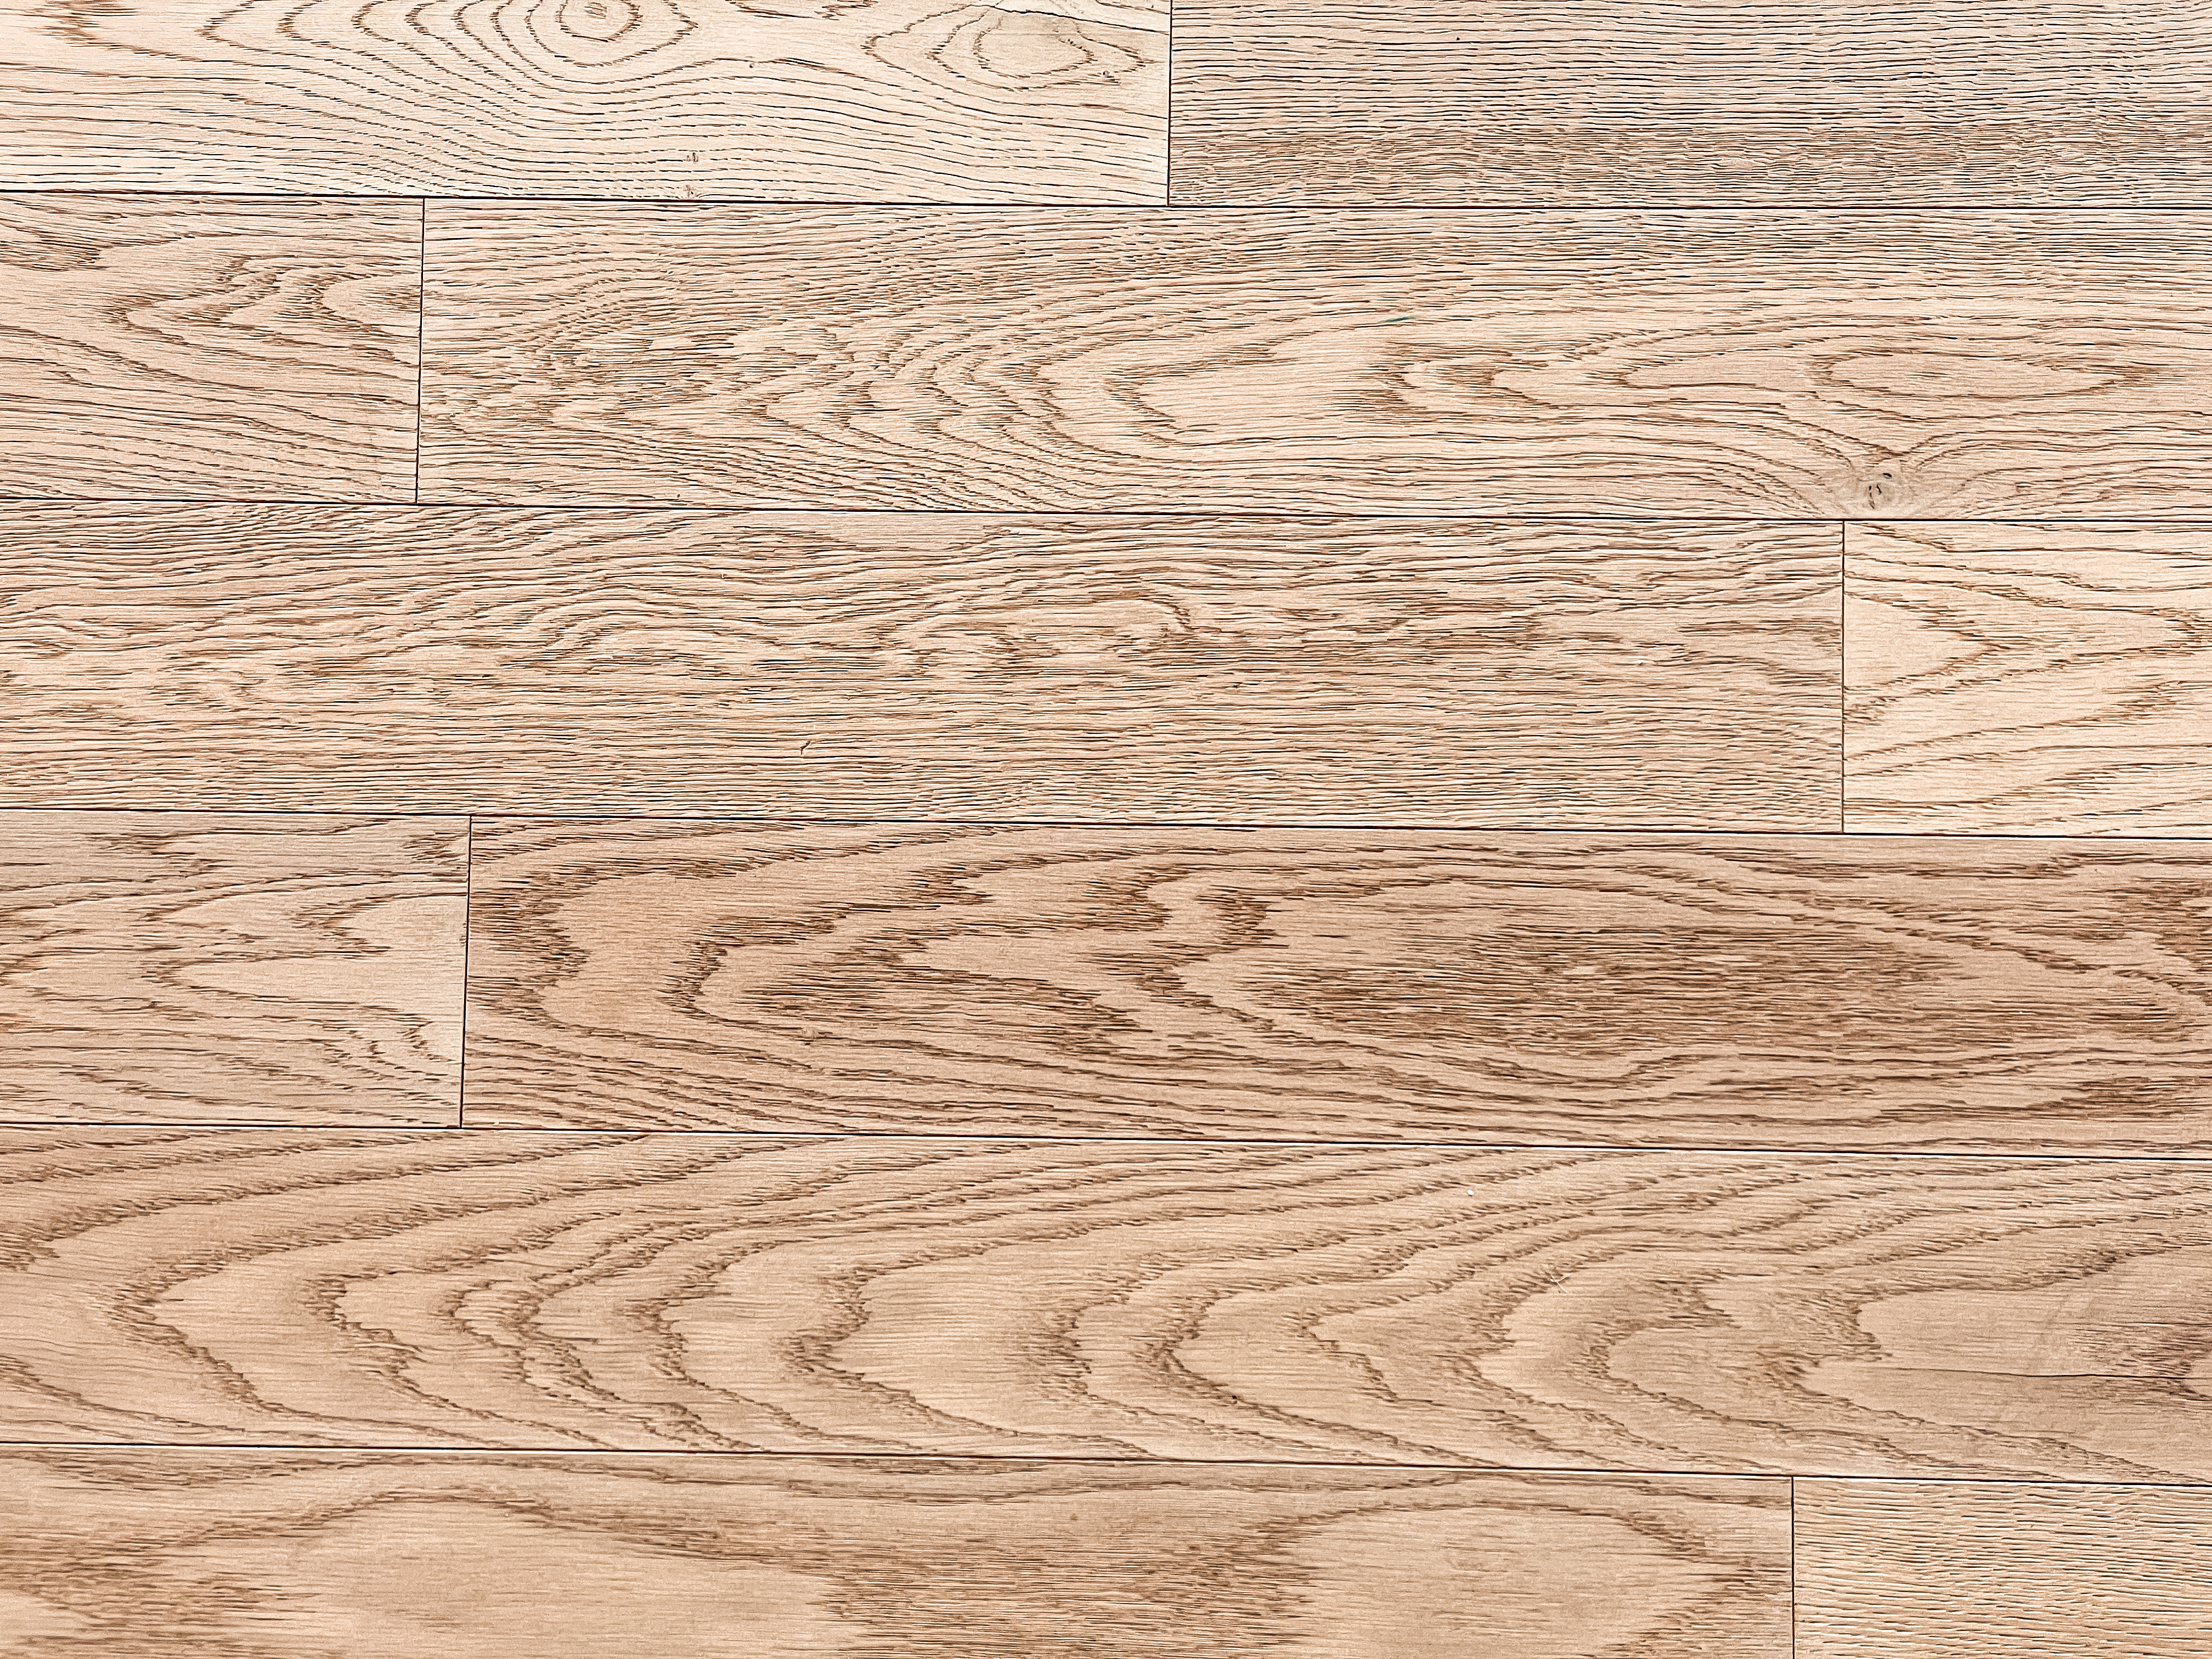 light wood flooring texture seamless